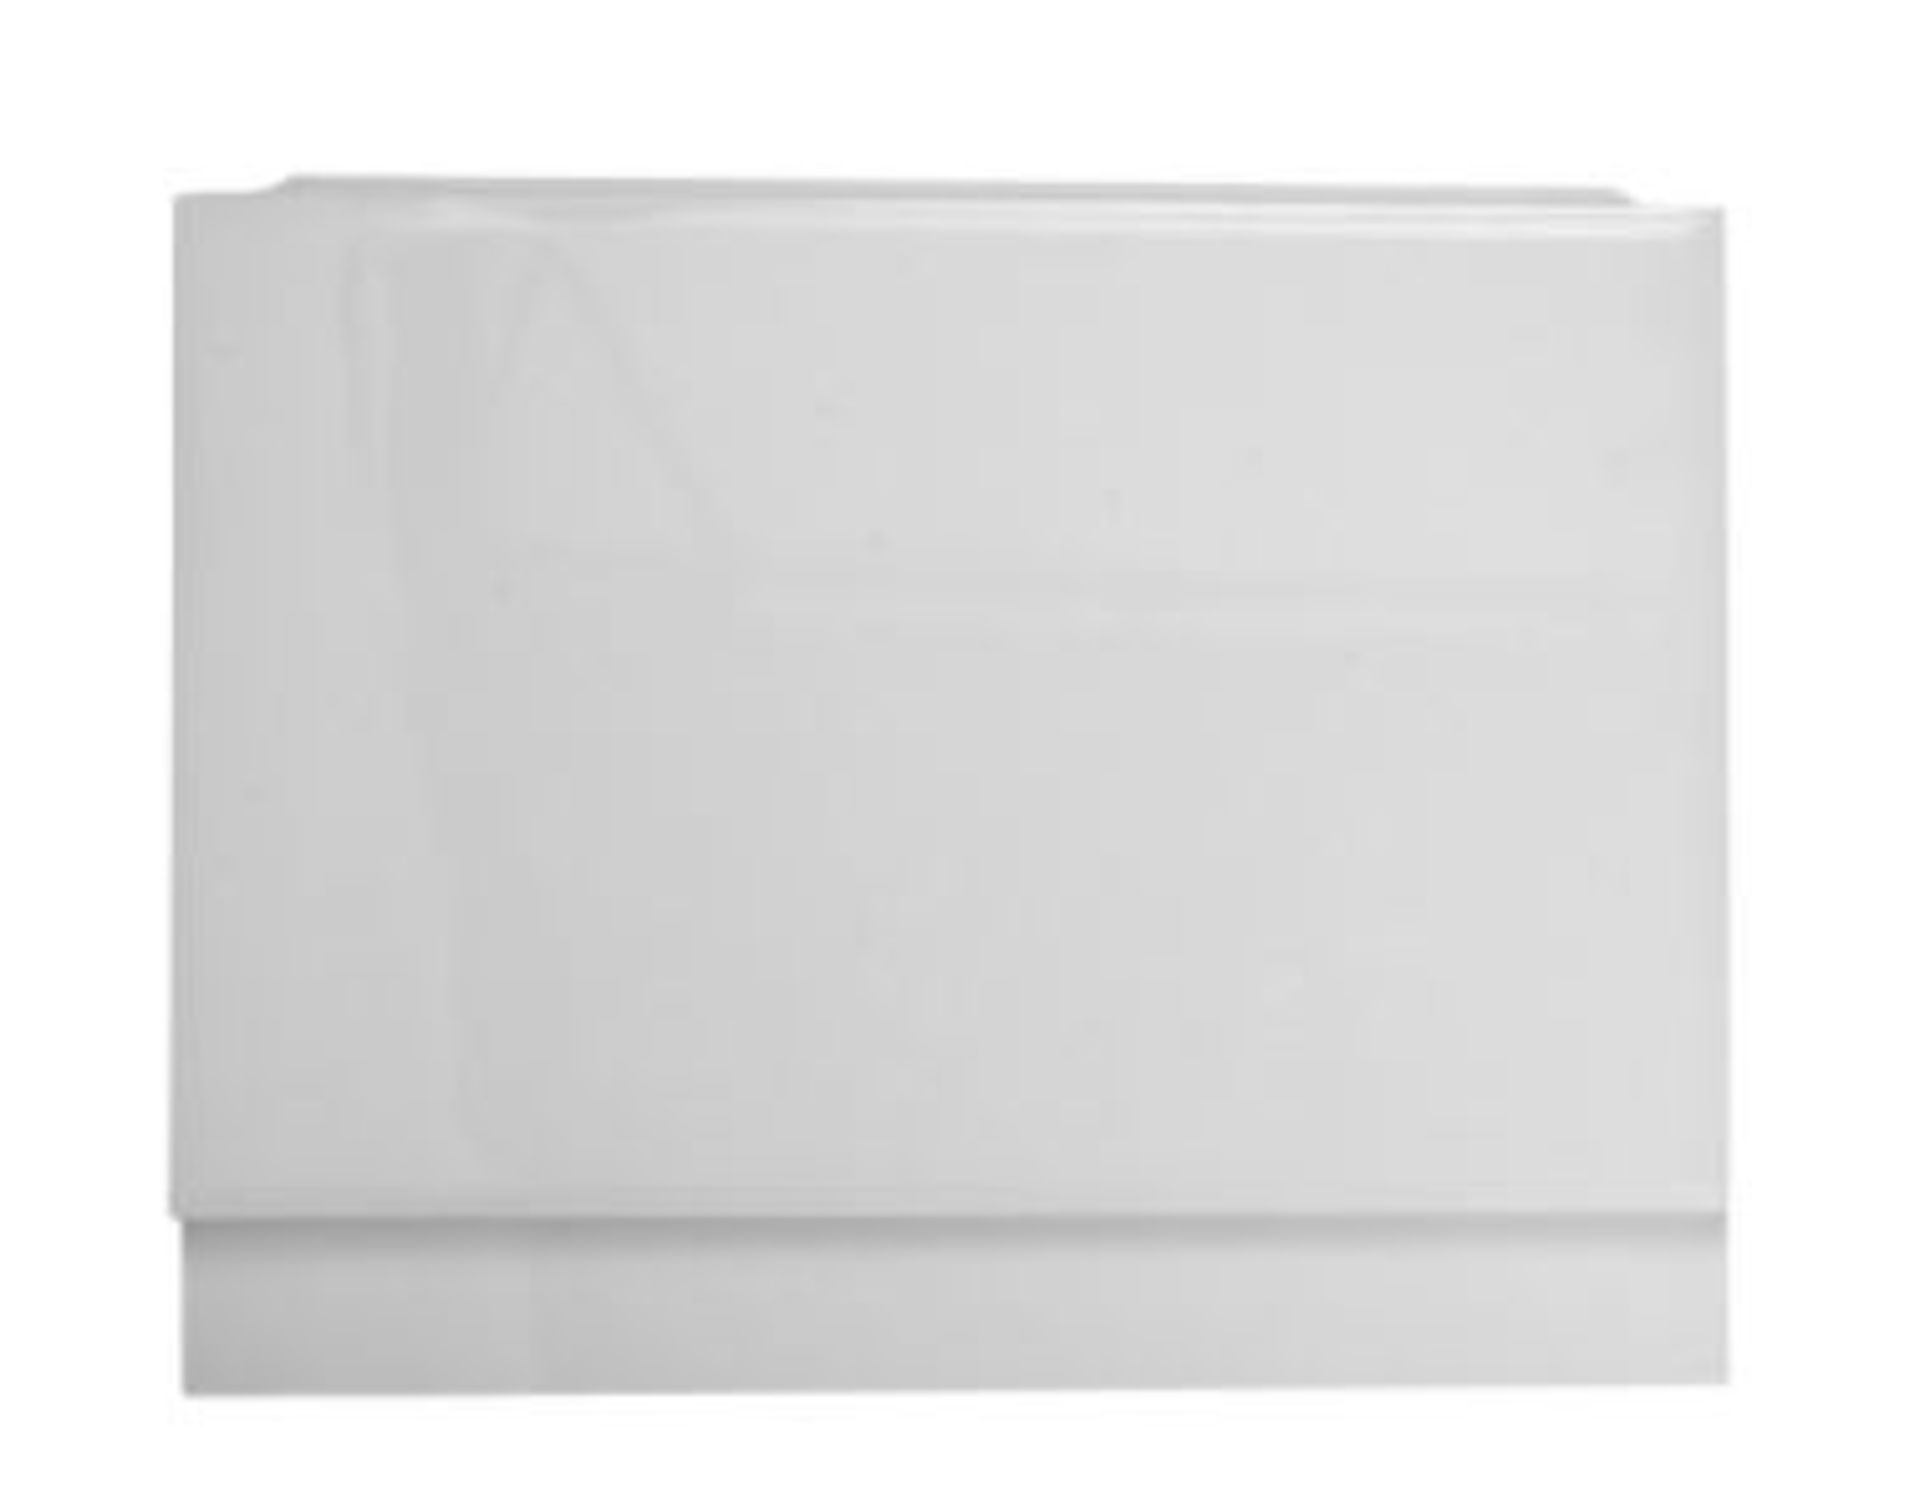 1 X COOKE & LEWIS GLOSS MEDIUM-DENSITY FIBREBOARD (MDF) WHITE END BATH PANEL (W)685MM / RRP £40.00